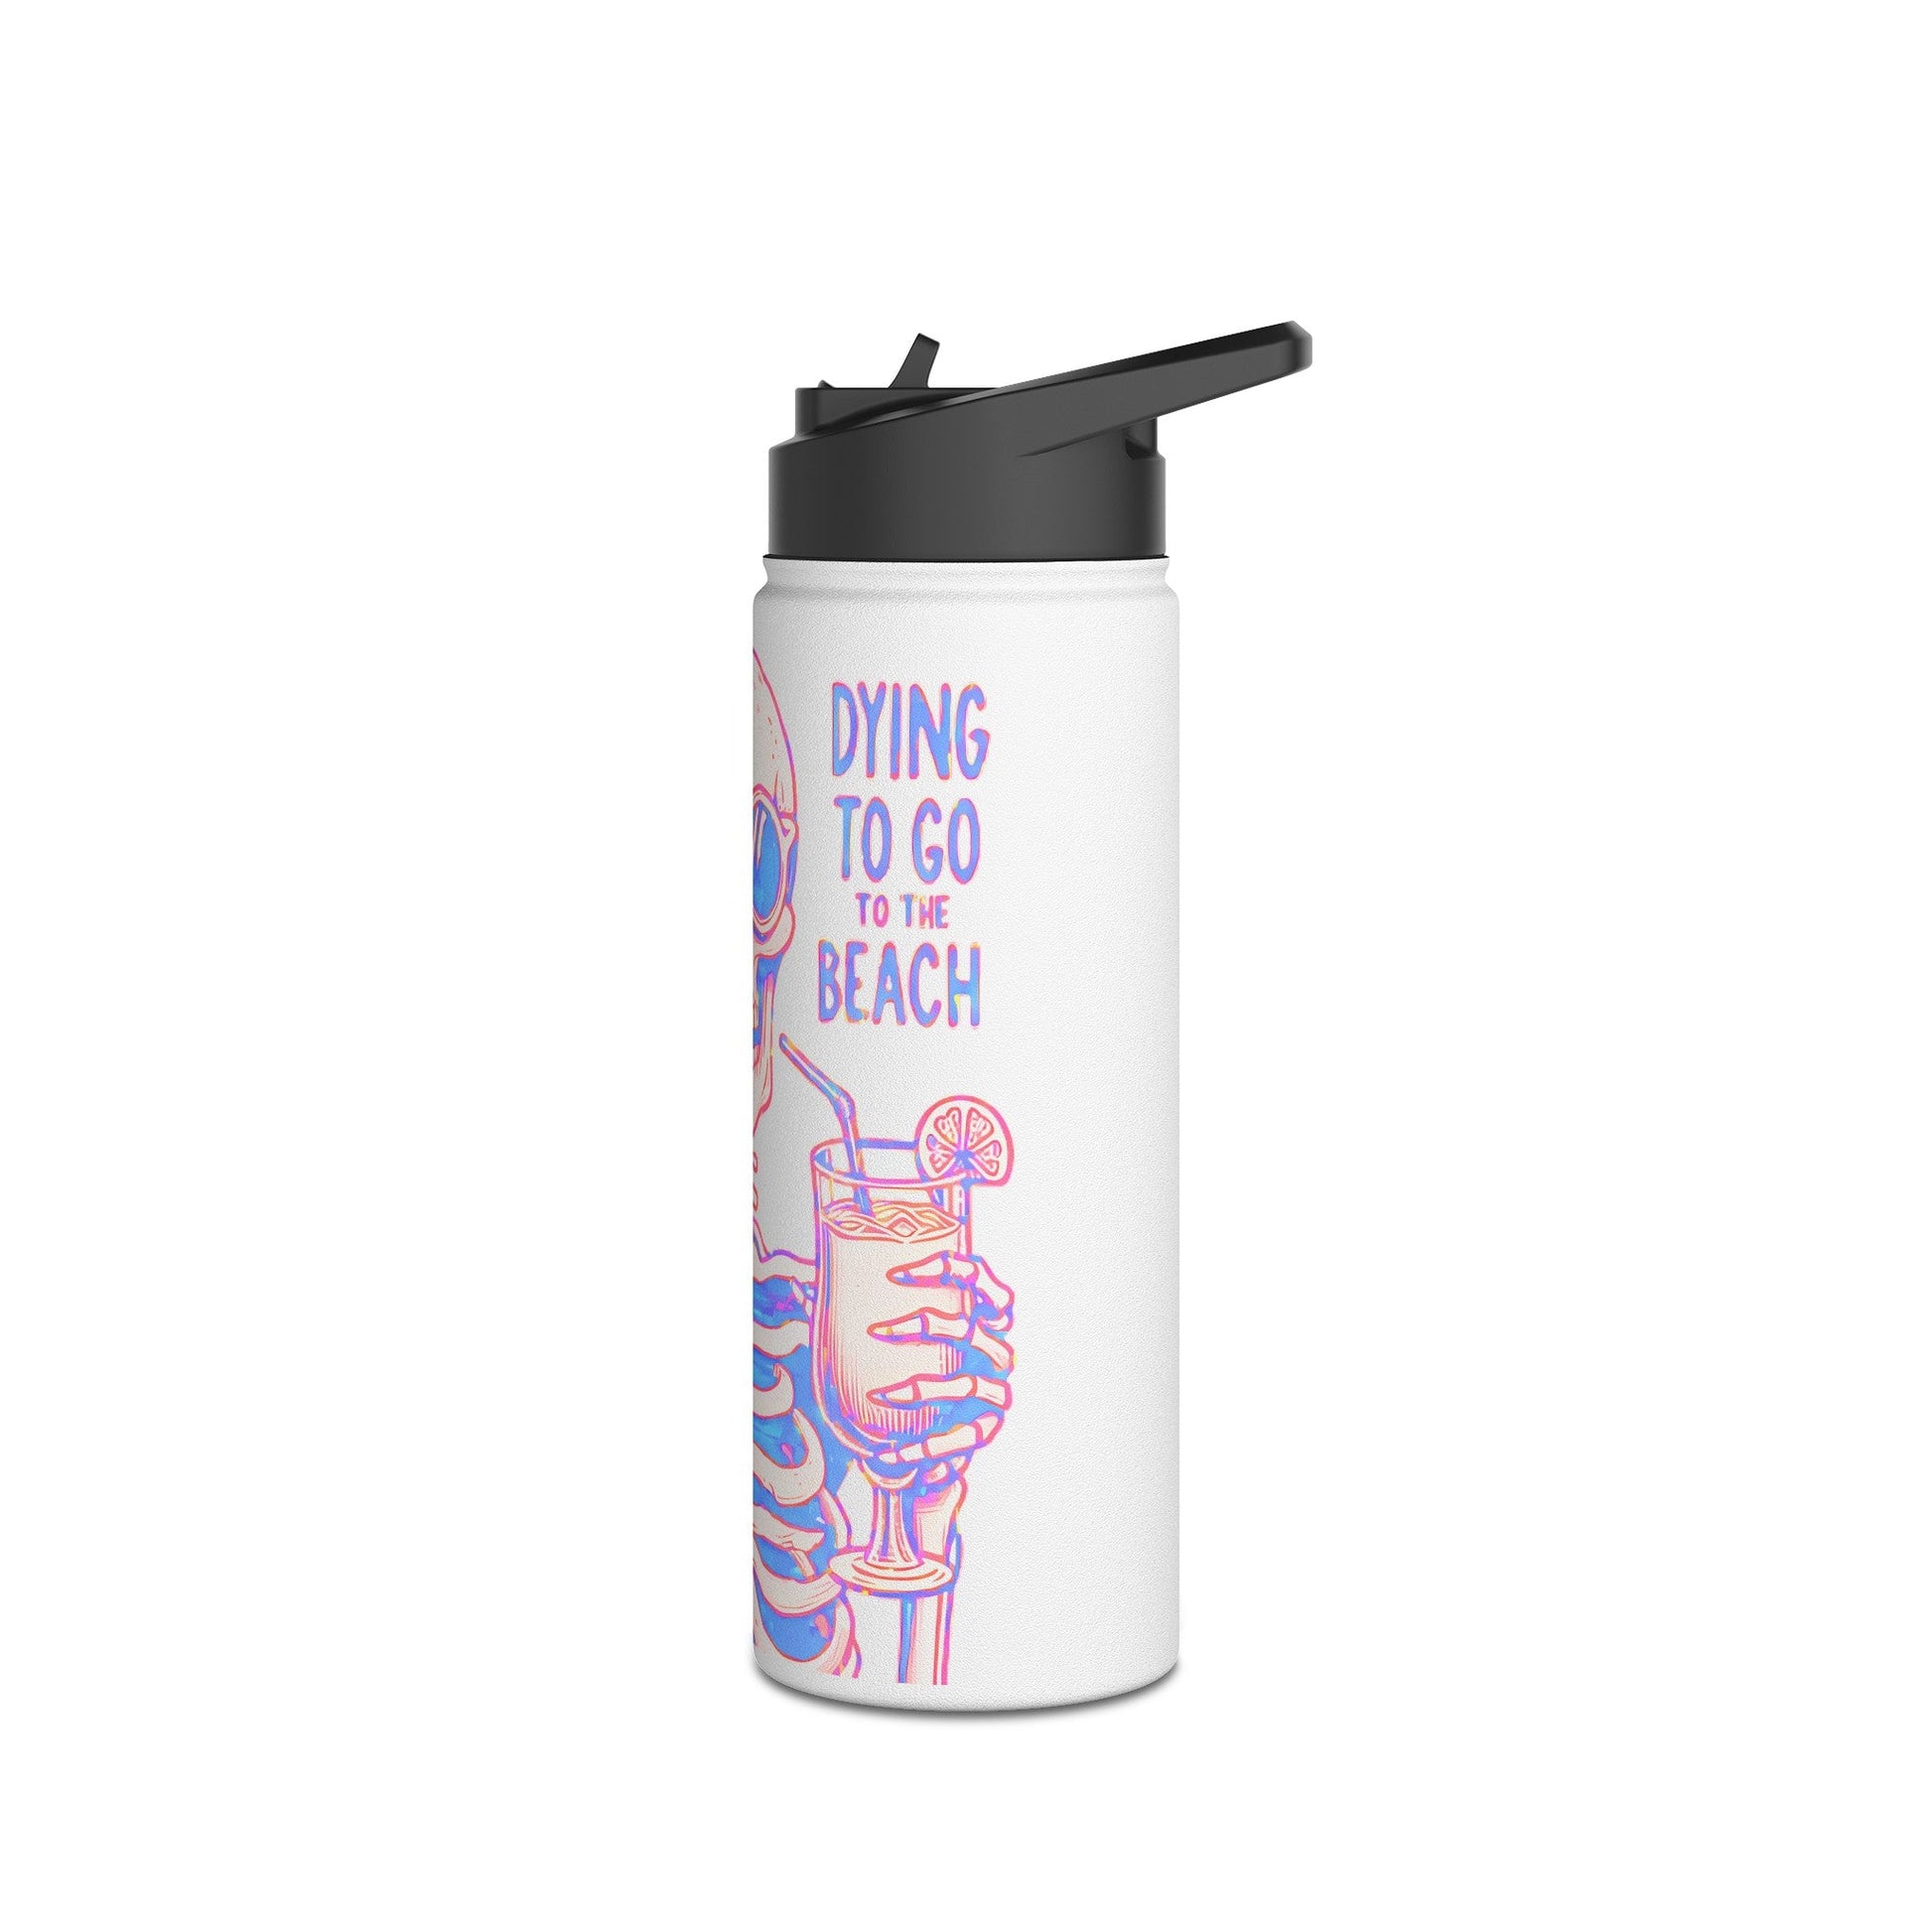 Dying To Go To The Beach Skeleton Stainless Steel Water BottleMugVTZdesigns32ozWhiteBack - to - SchoolBeverageBottles